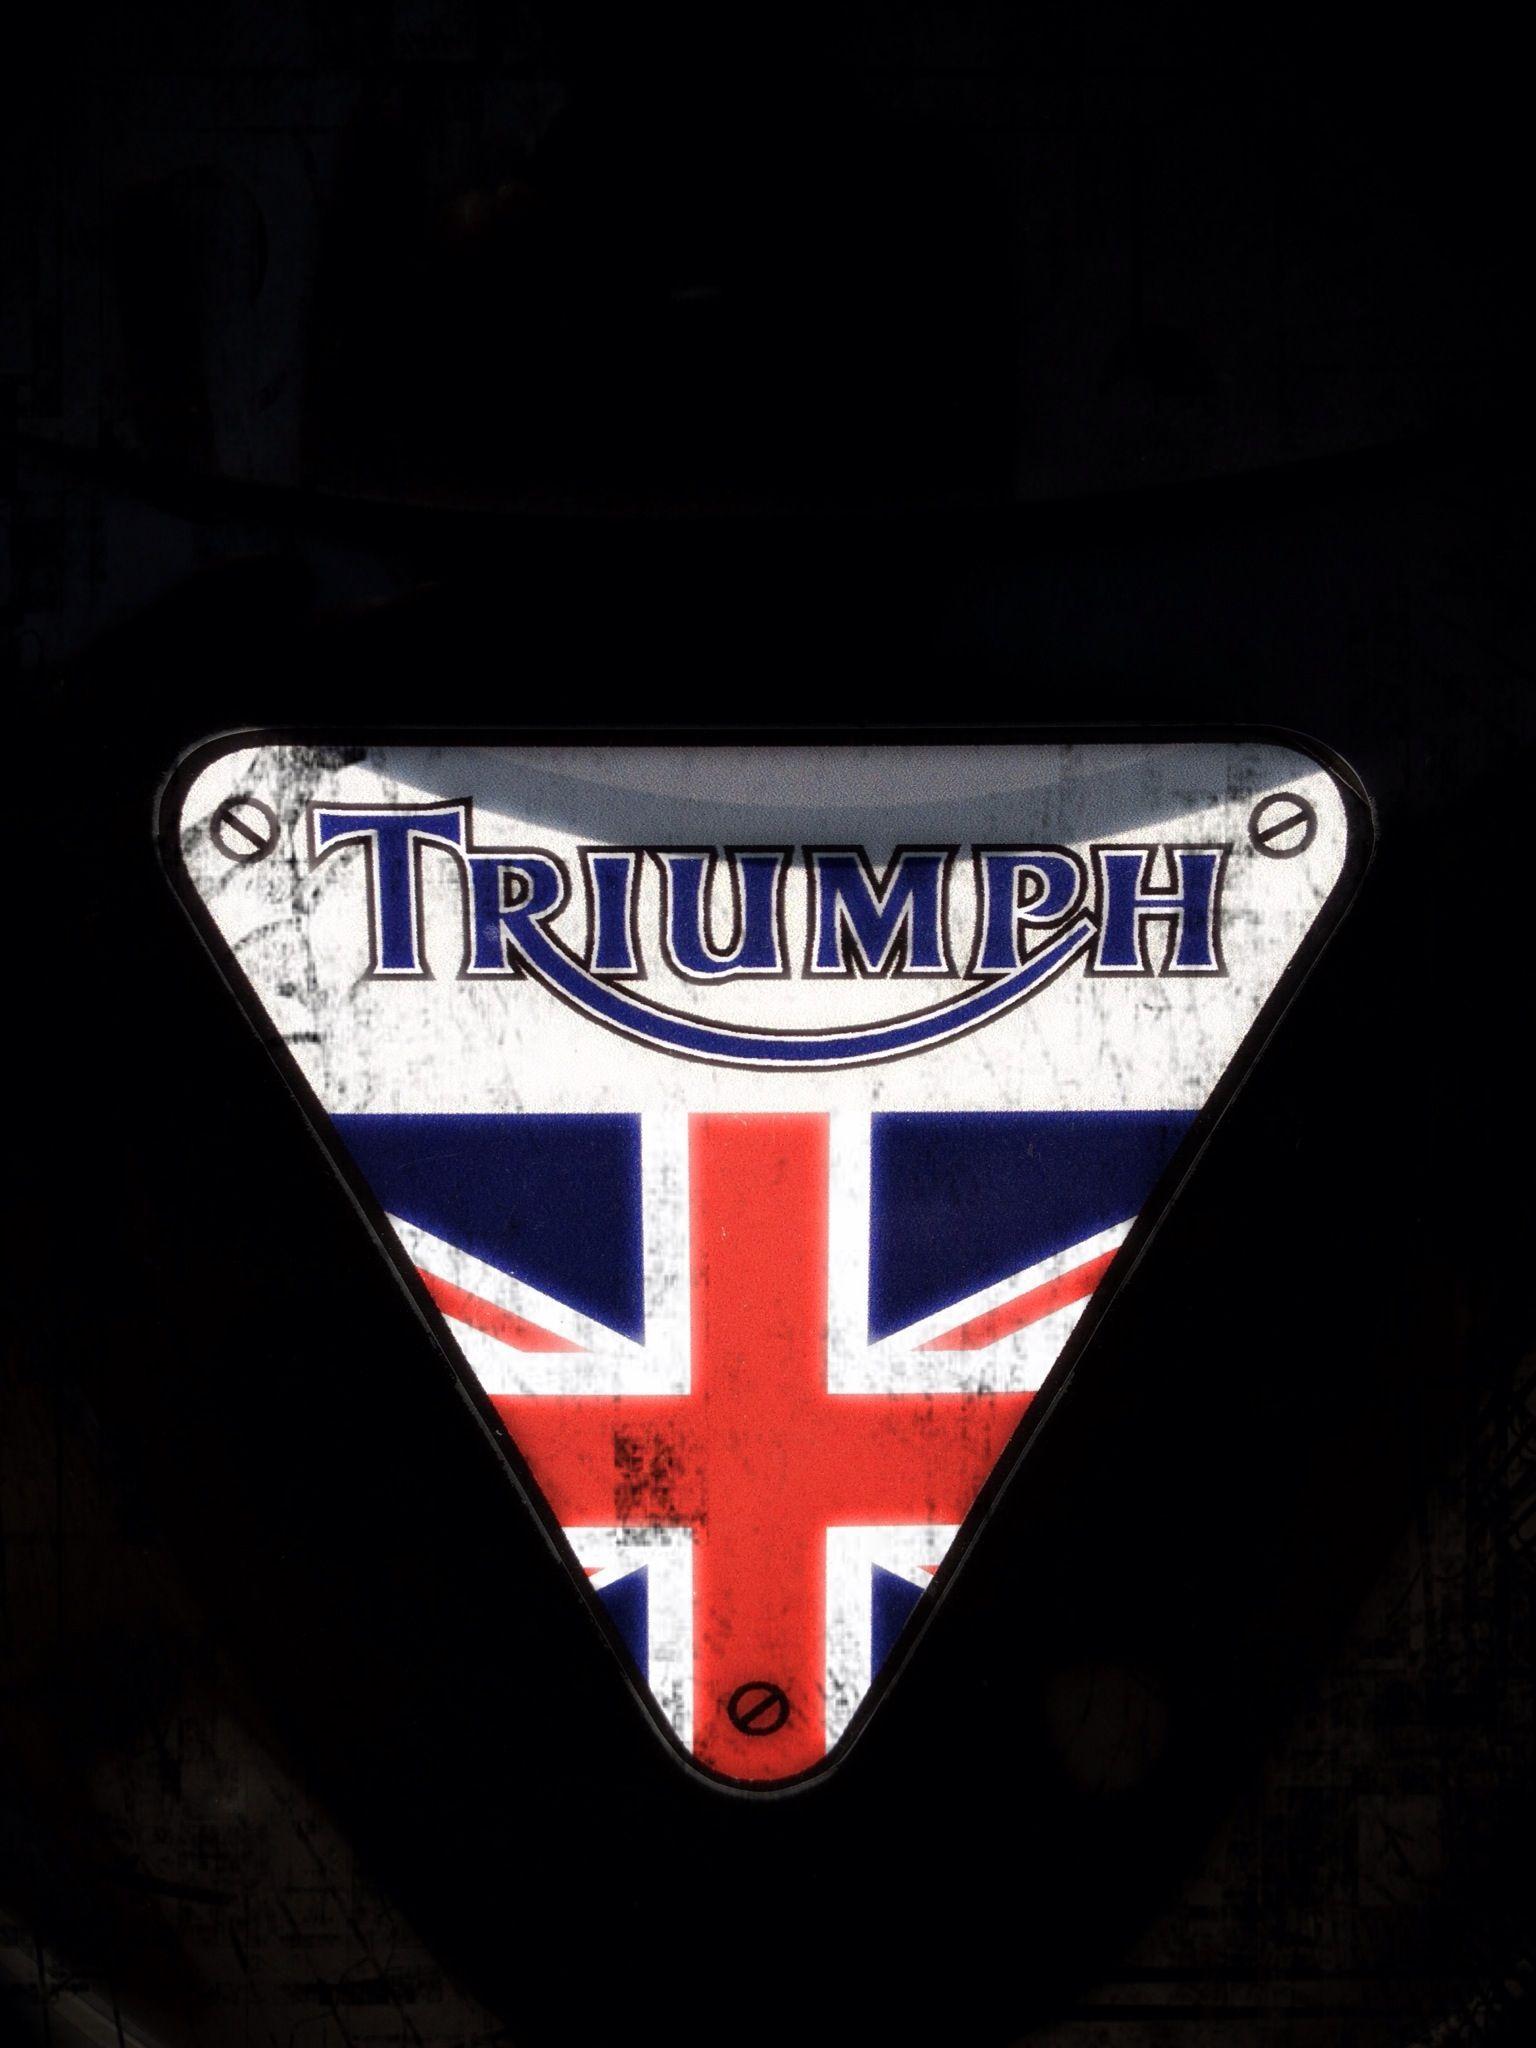 New Triumph Motorcycle Logo - Triumph logo | Motostories | Triumph motorcycles, Triumph logo ...